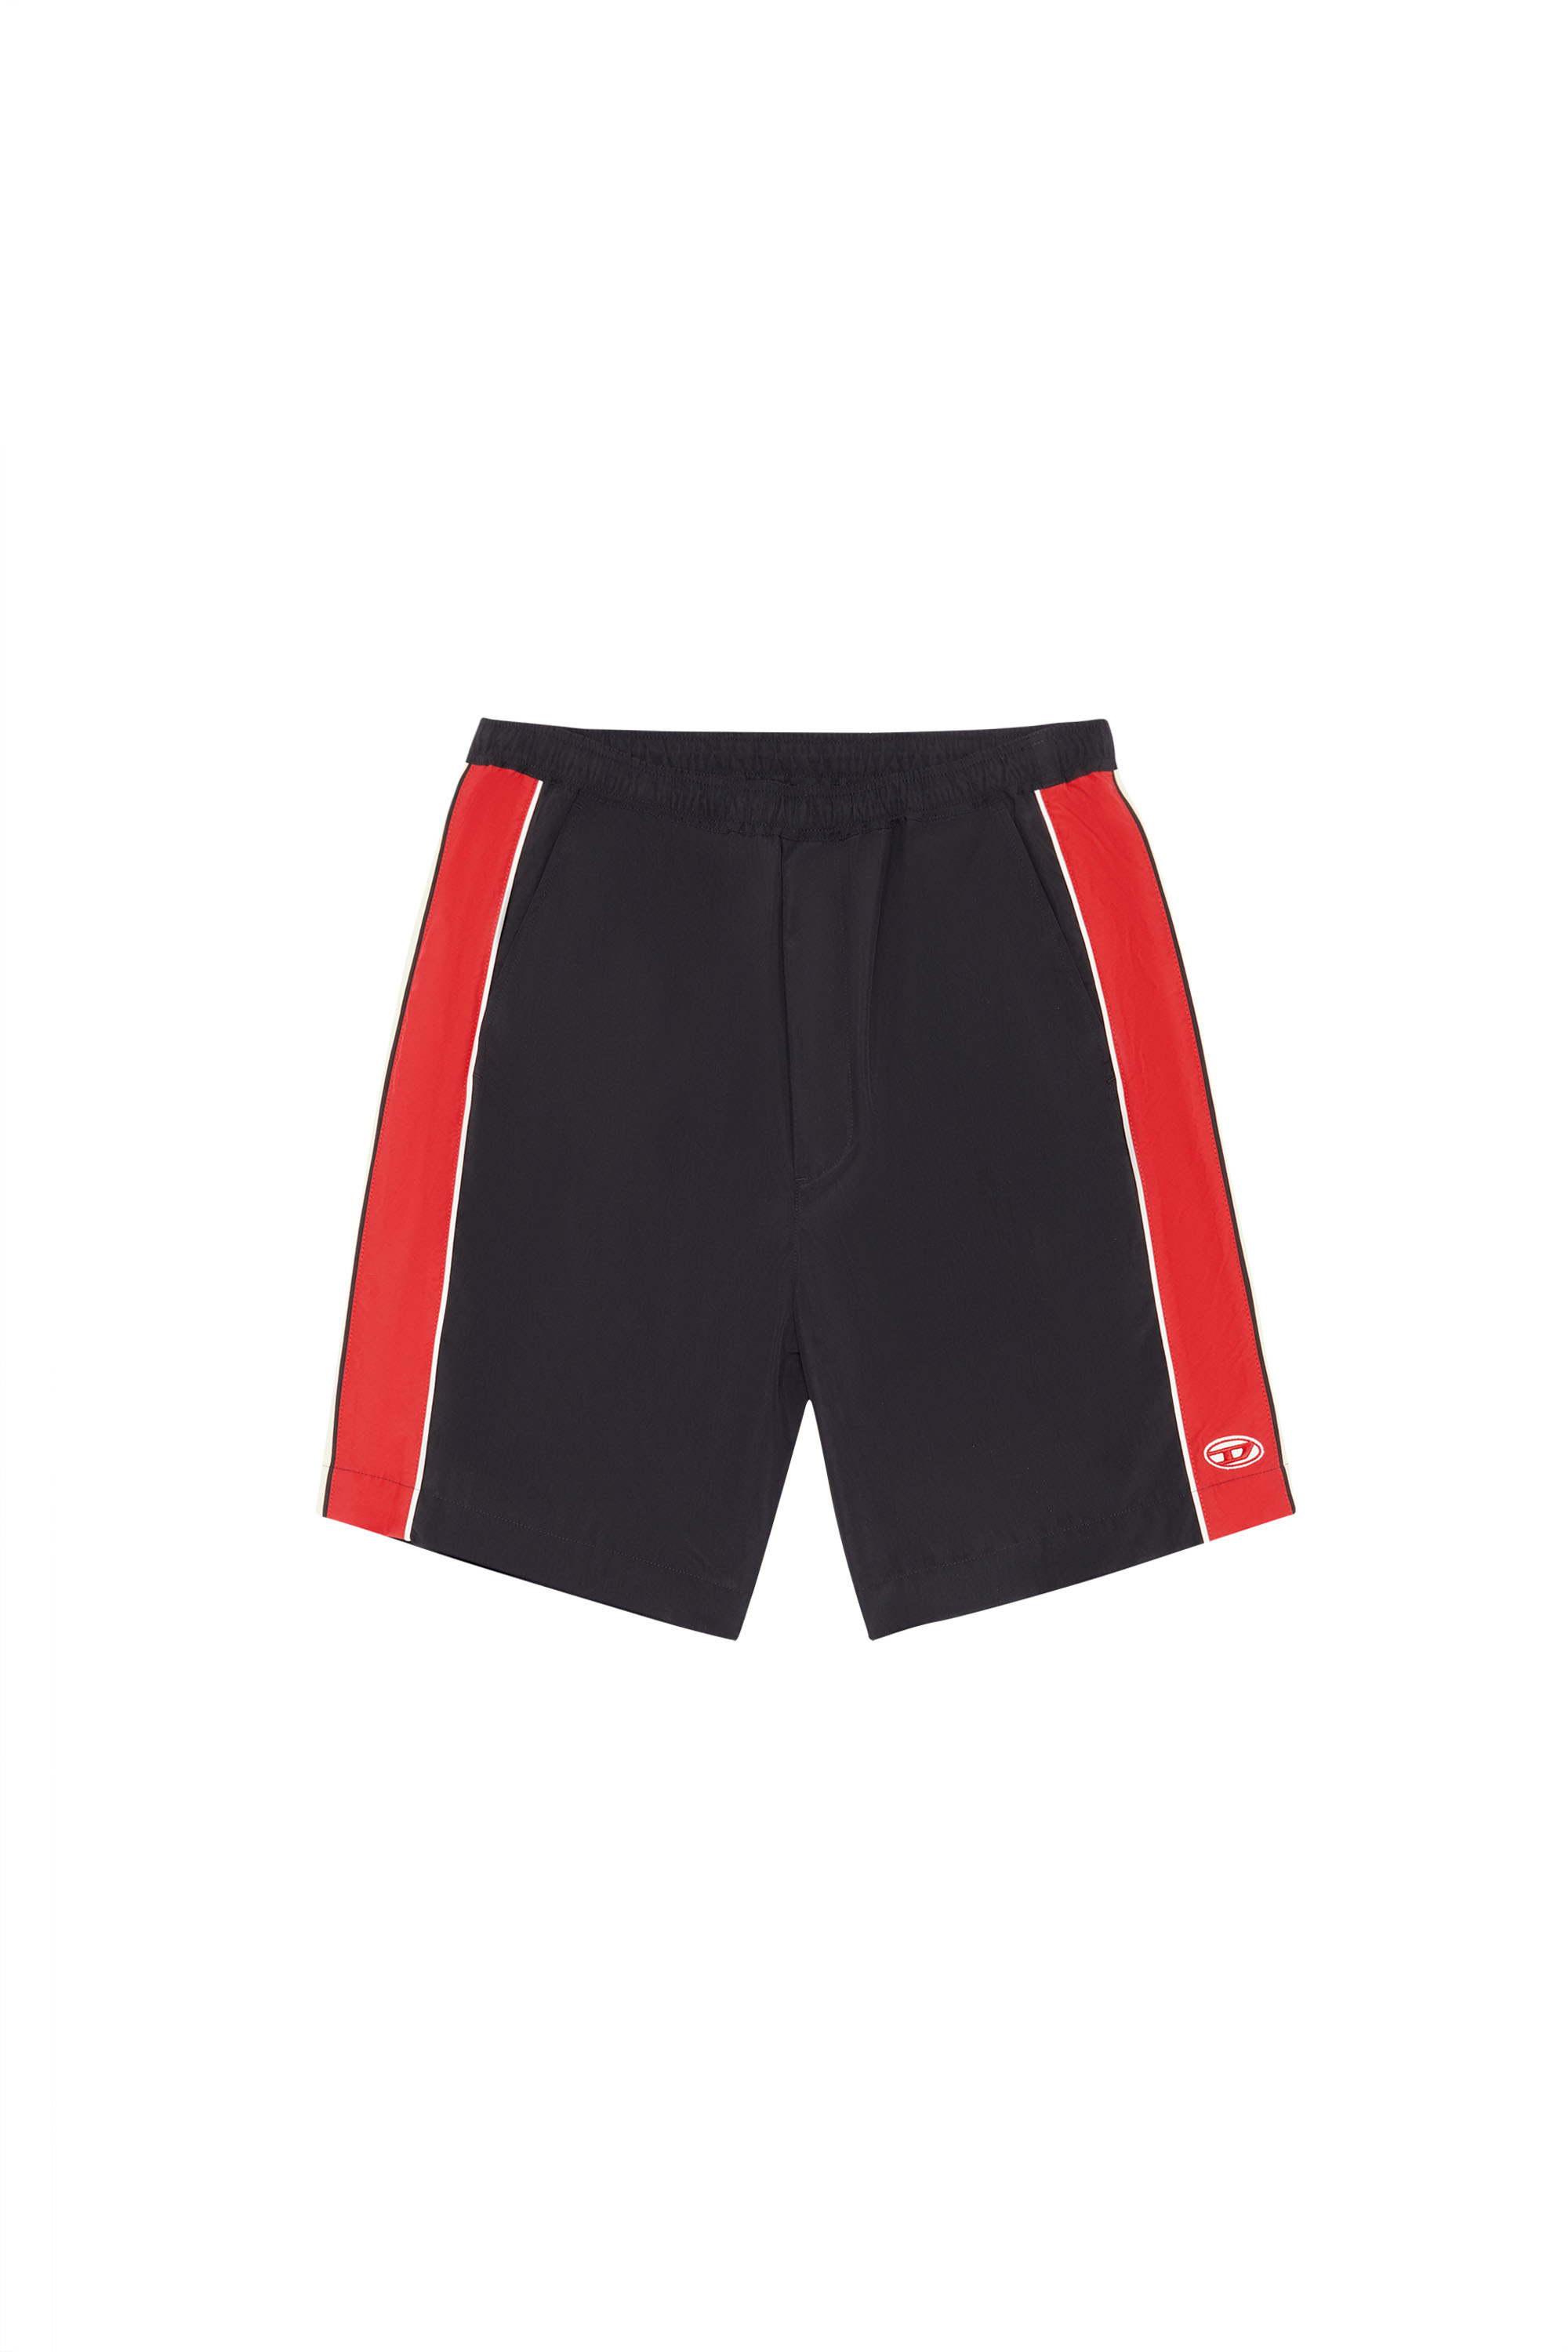 P-SPORTS-SHORT, Black/Red - Pants